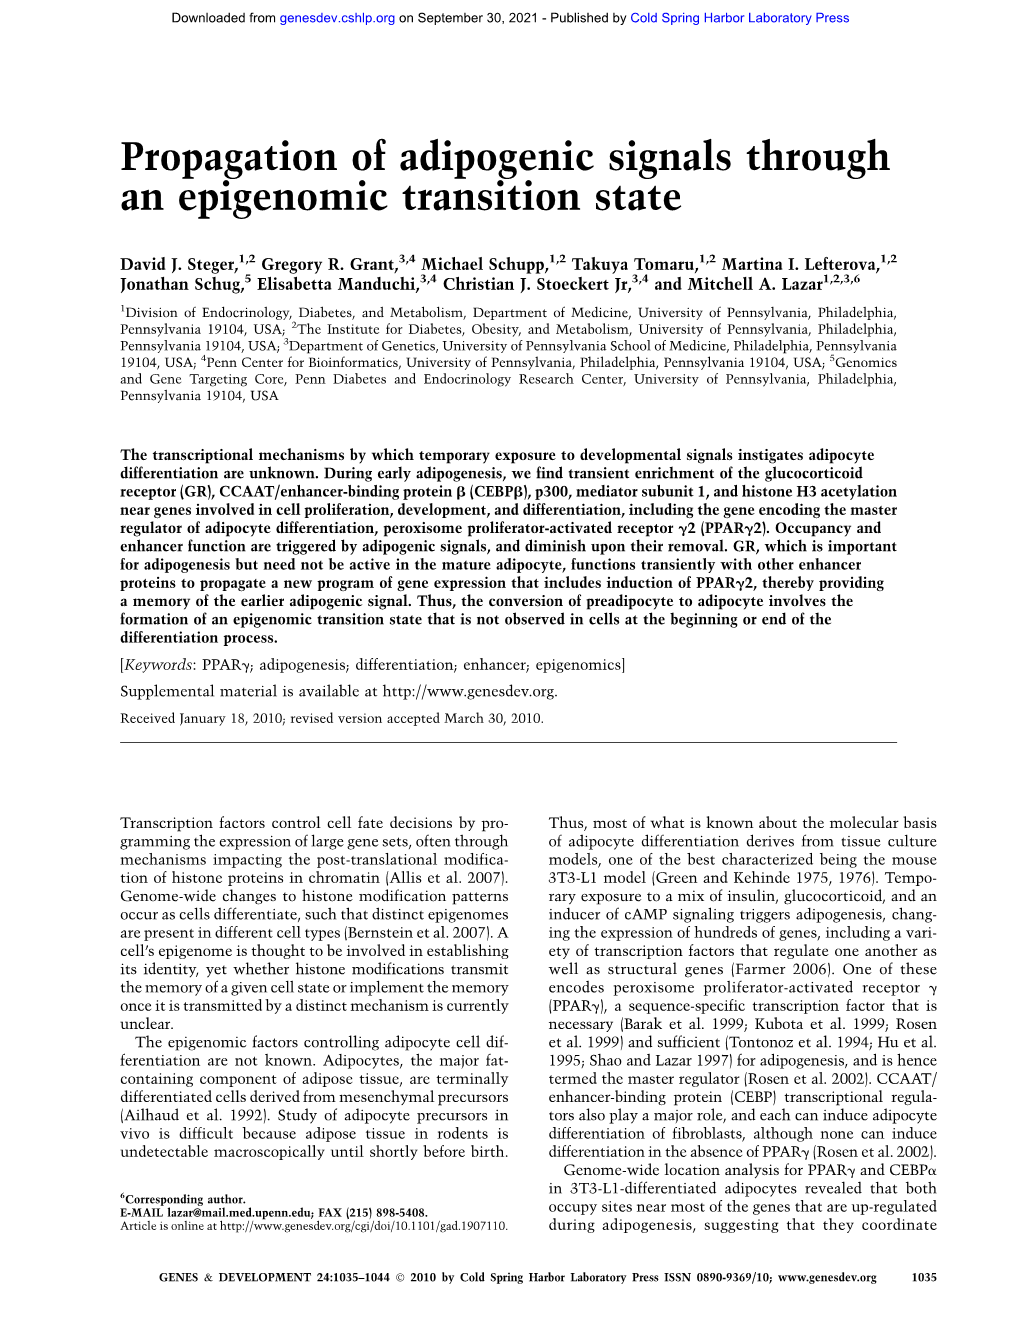 Propagation of Adipogenic Signals Through an Epigenomic Transition State